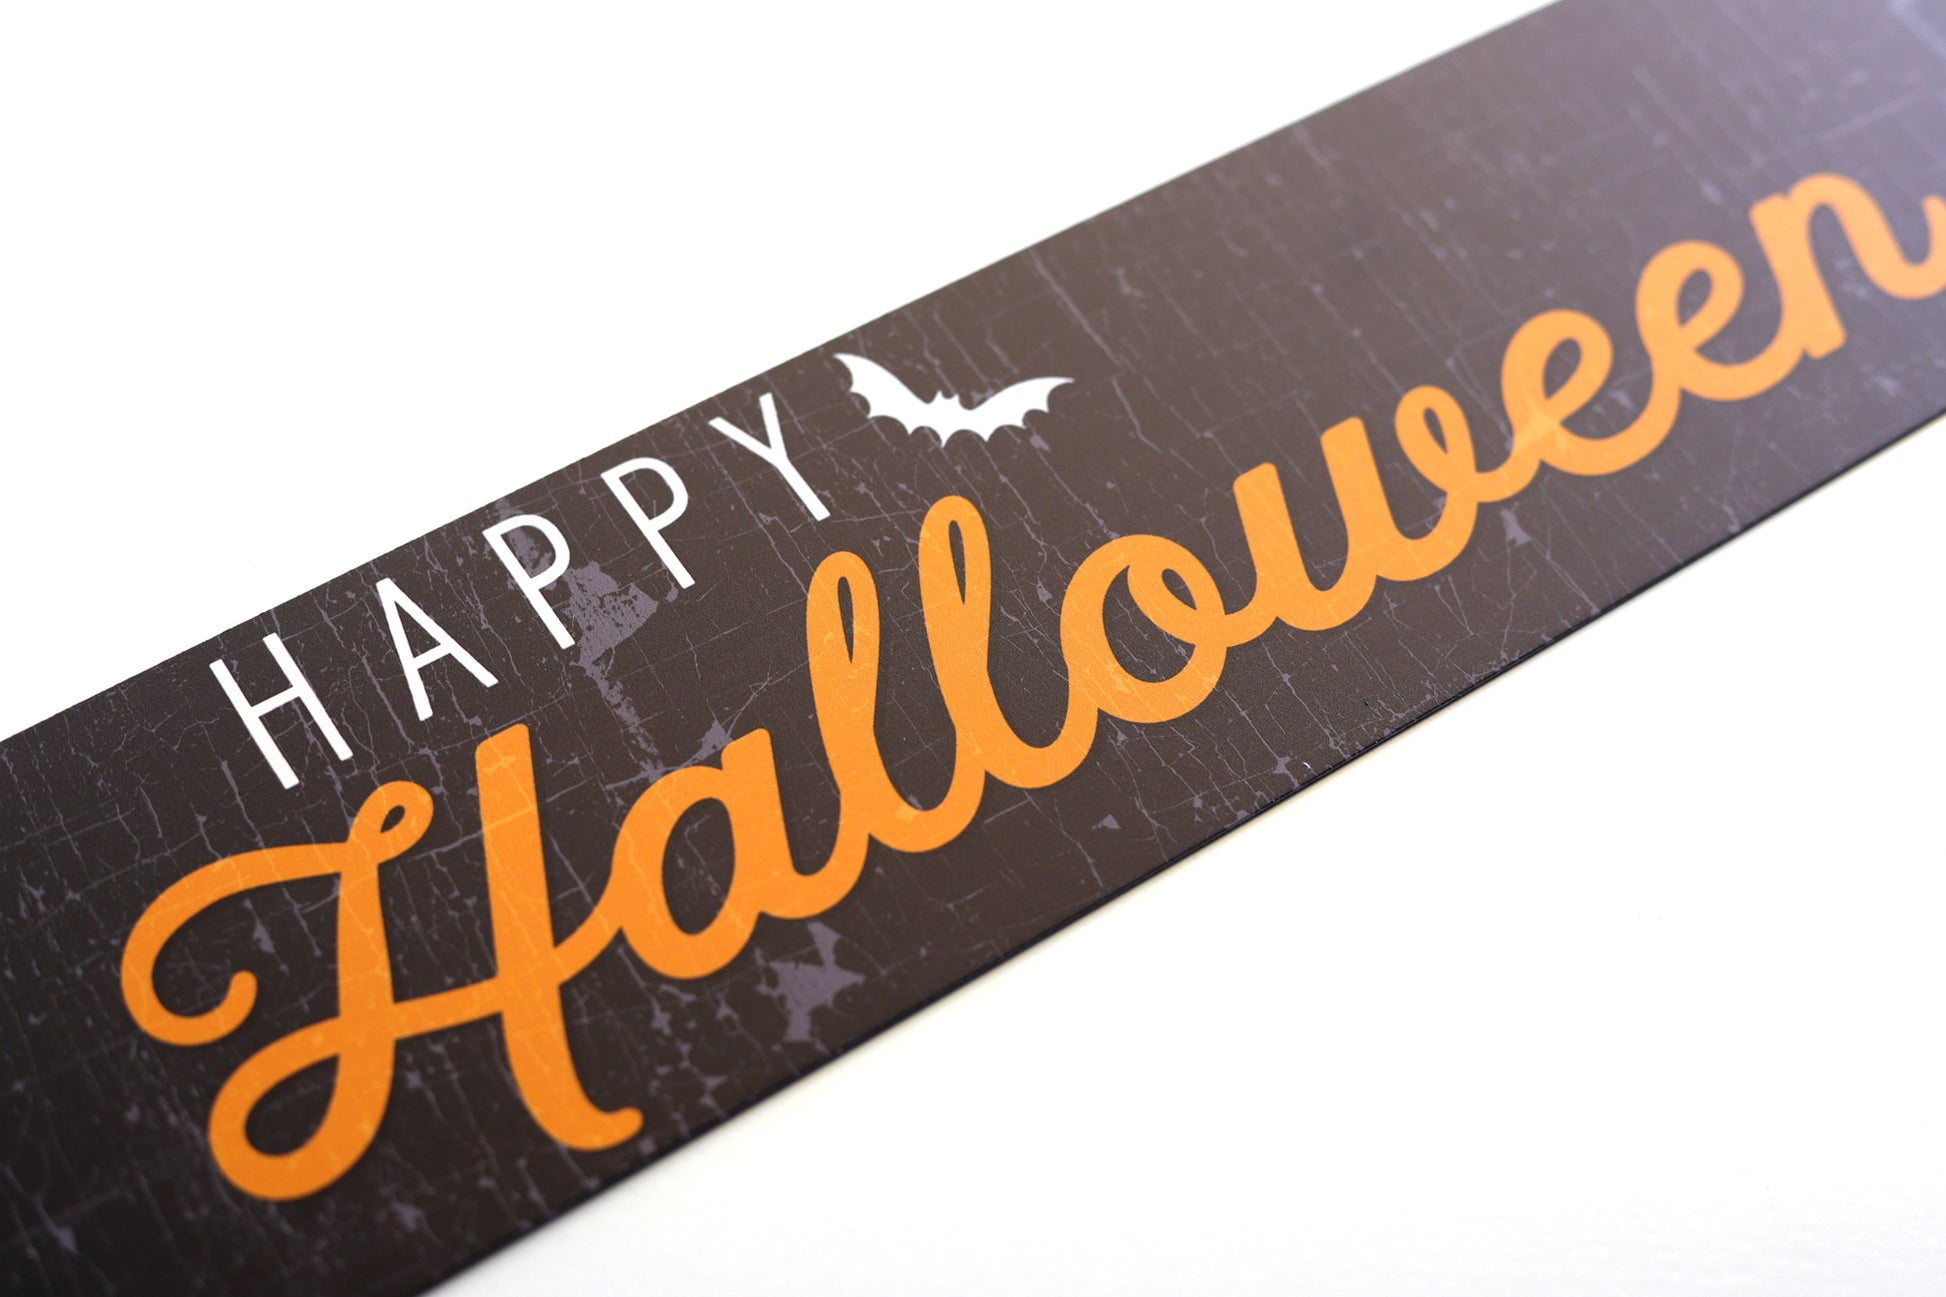 Happy Halloween Orange with Bat - The Sign Shoppe 